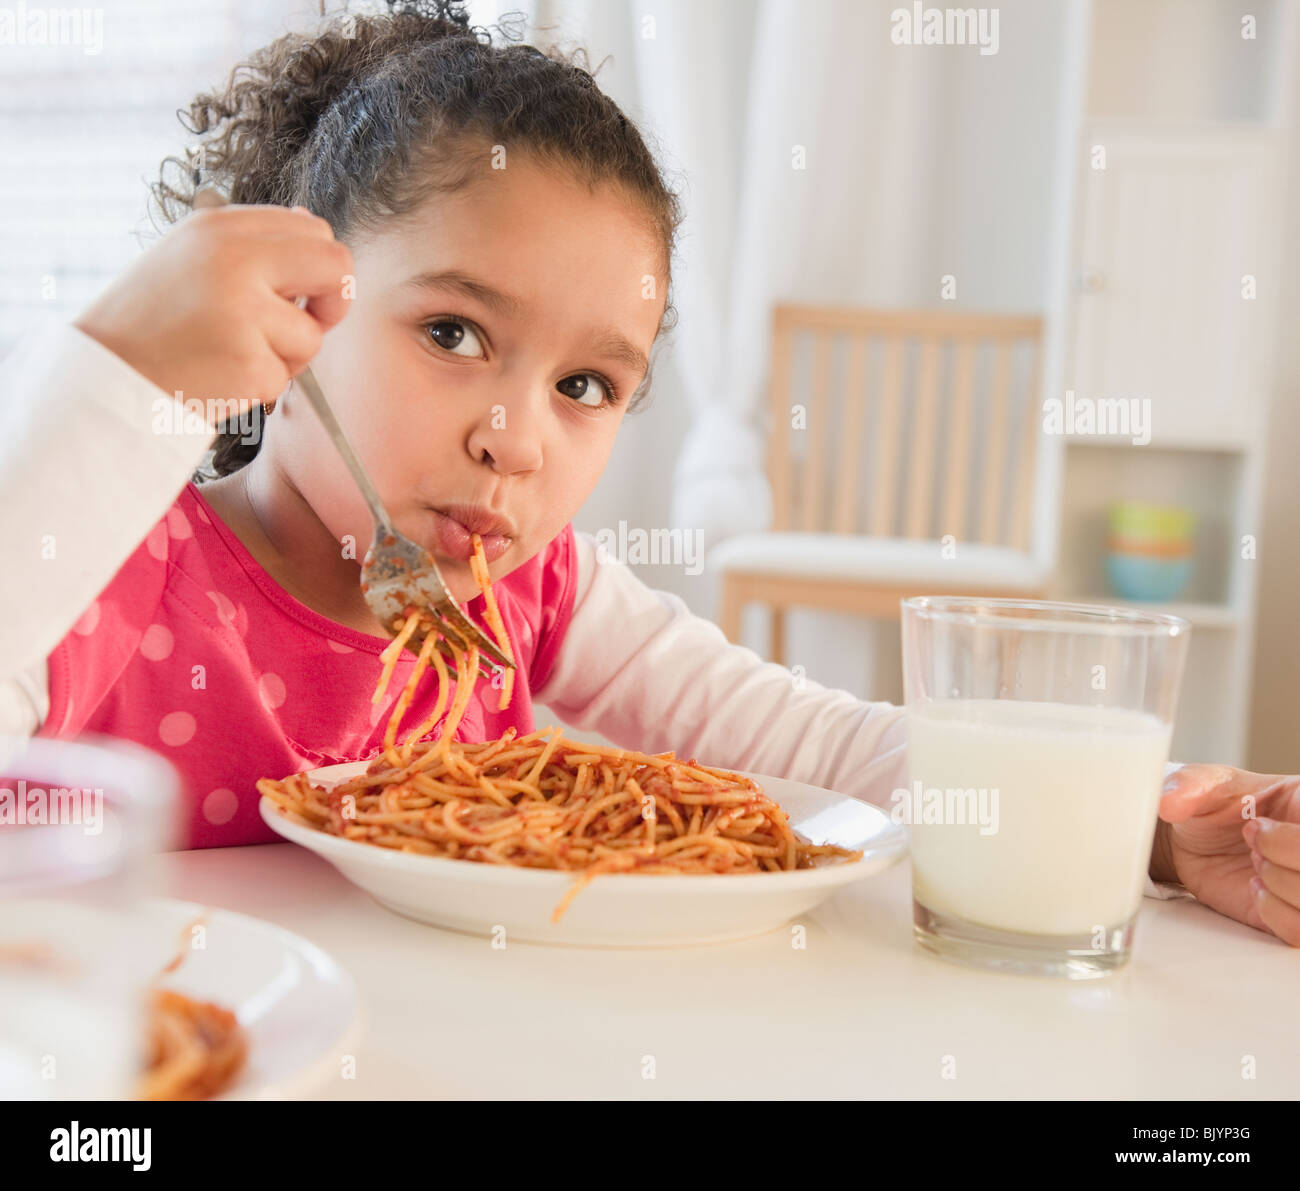 Hispanic girl eating spaghetti Stock Photo